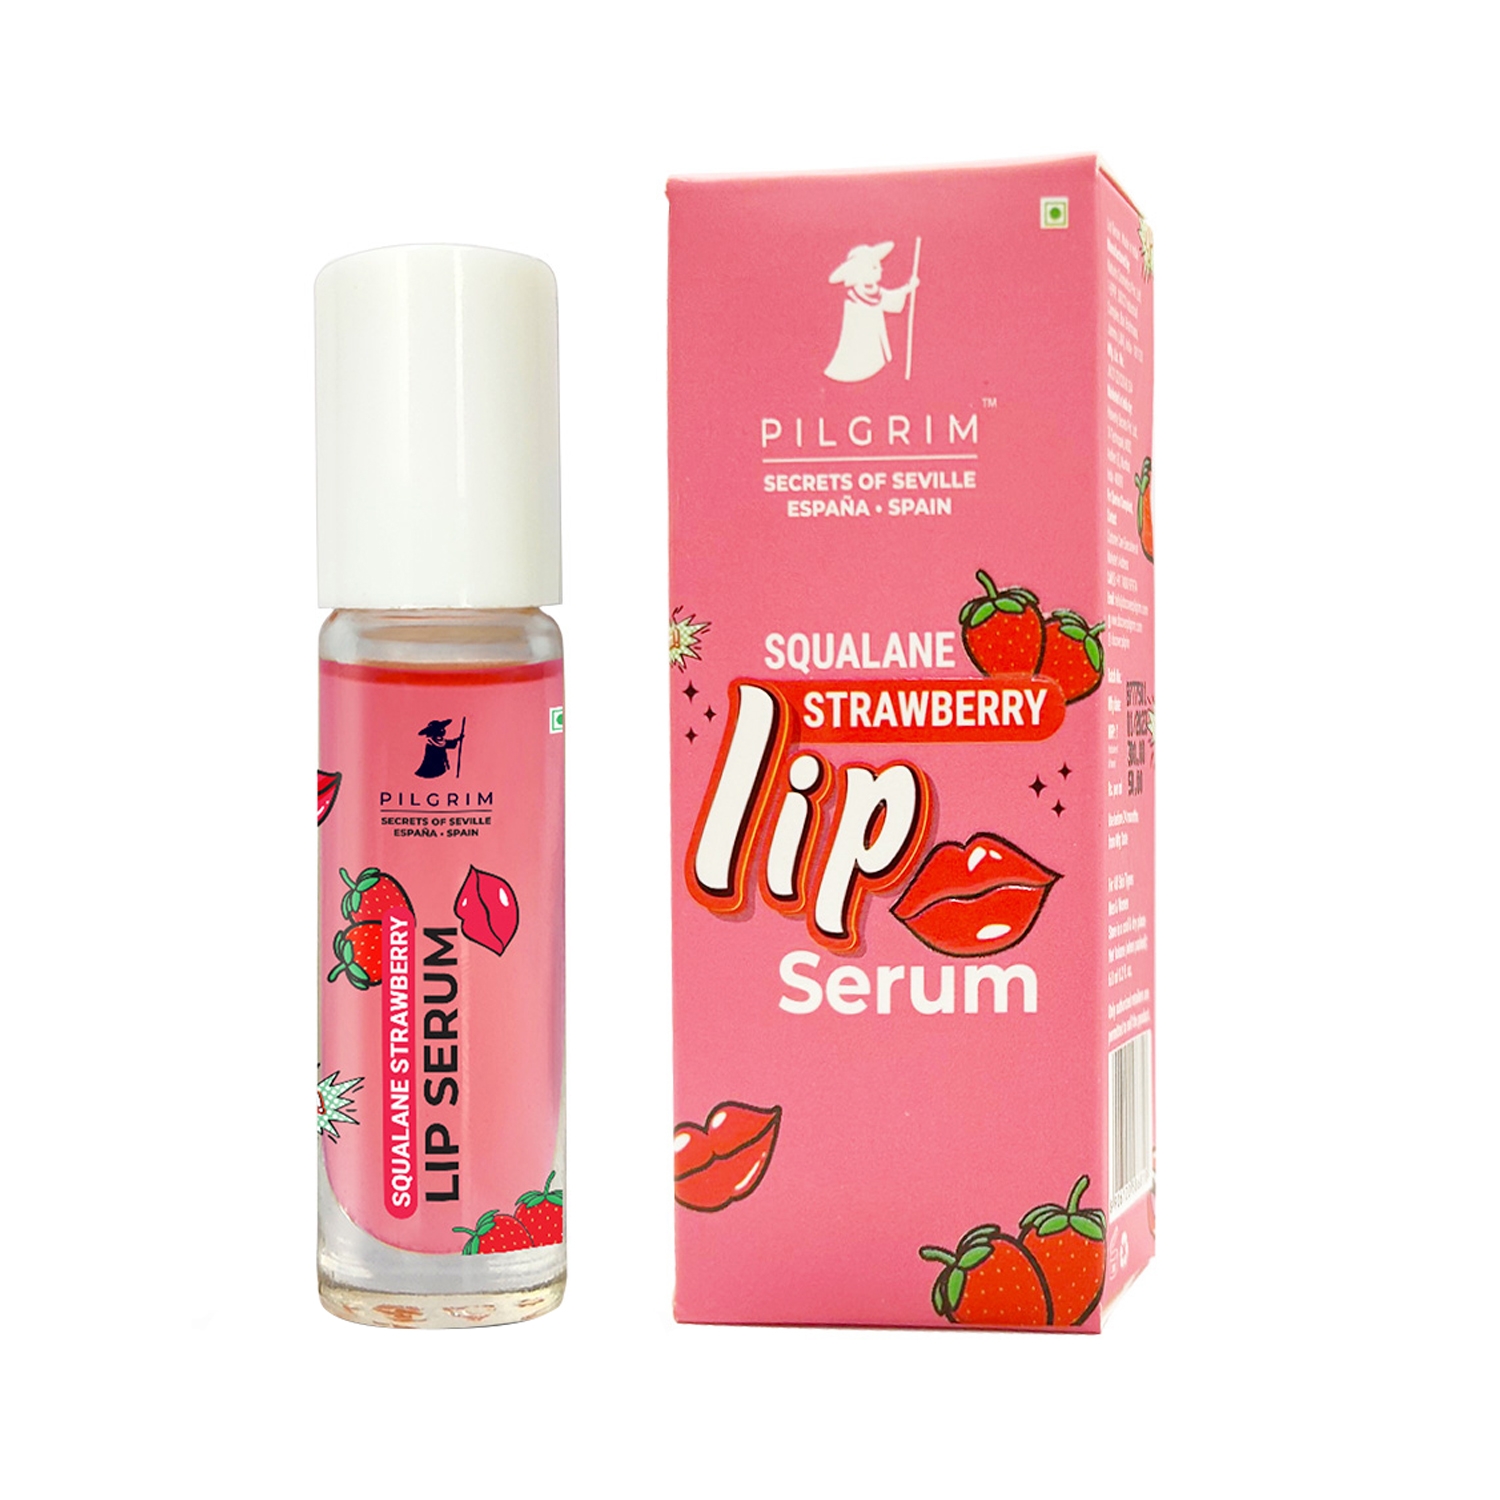 Pilgrim | Pilgrim Squalane Strawberry Lip Serum With Roll On For Visibly Plump & Supple Lips (6ml)